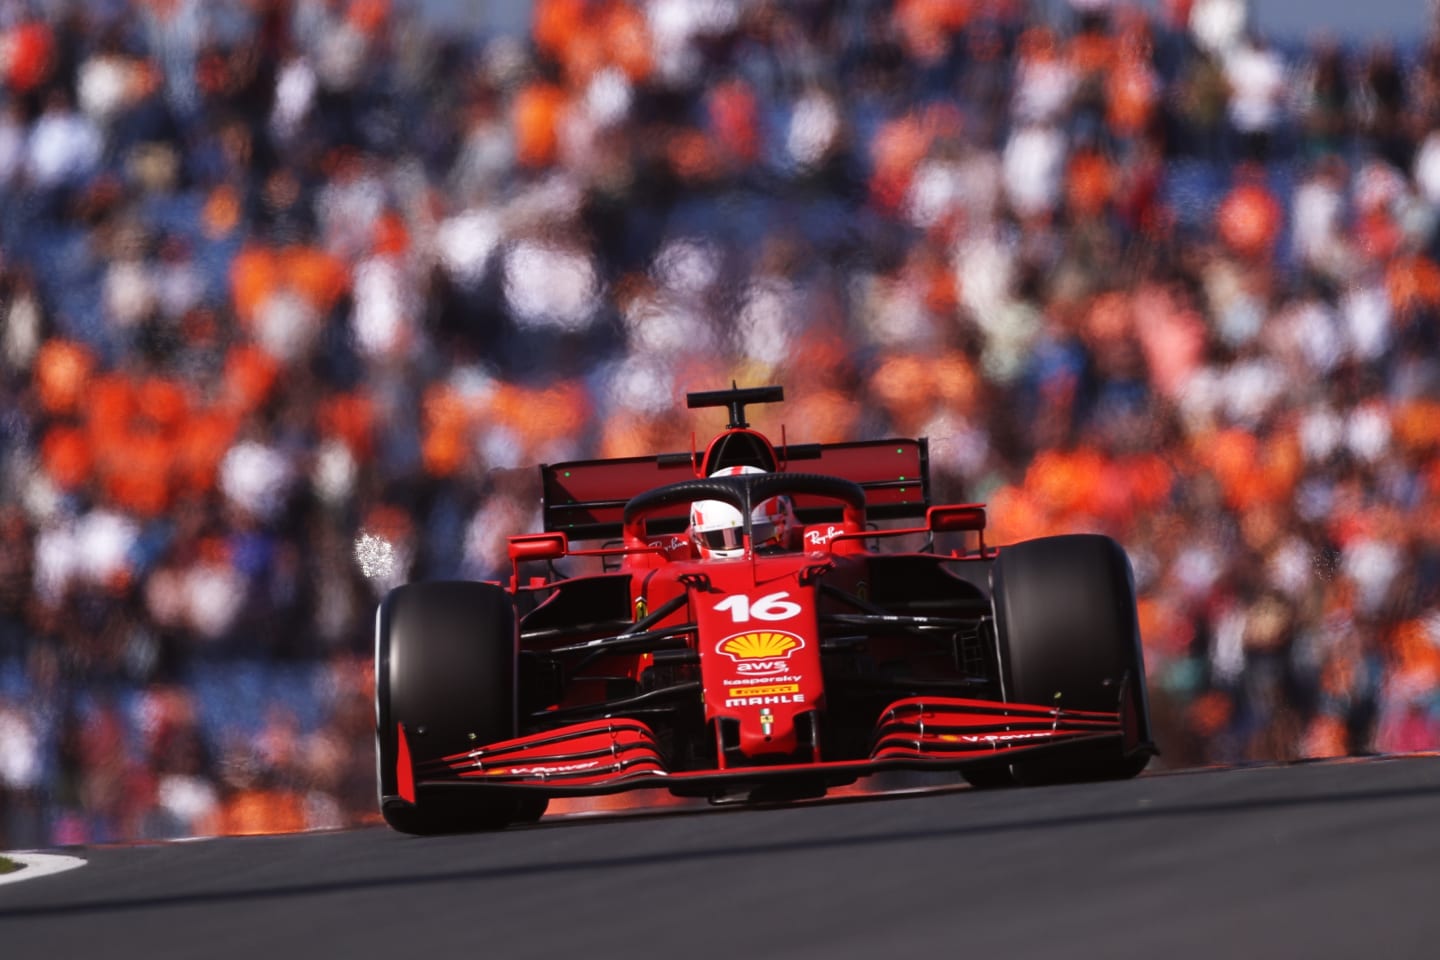 ZANDVOORT, NETHERLANDS - SEPTEMBER 03: Charles Leclerc of Monaco driving the (16) Scuderia Ferrari